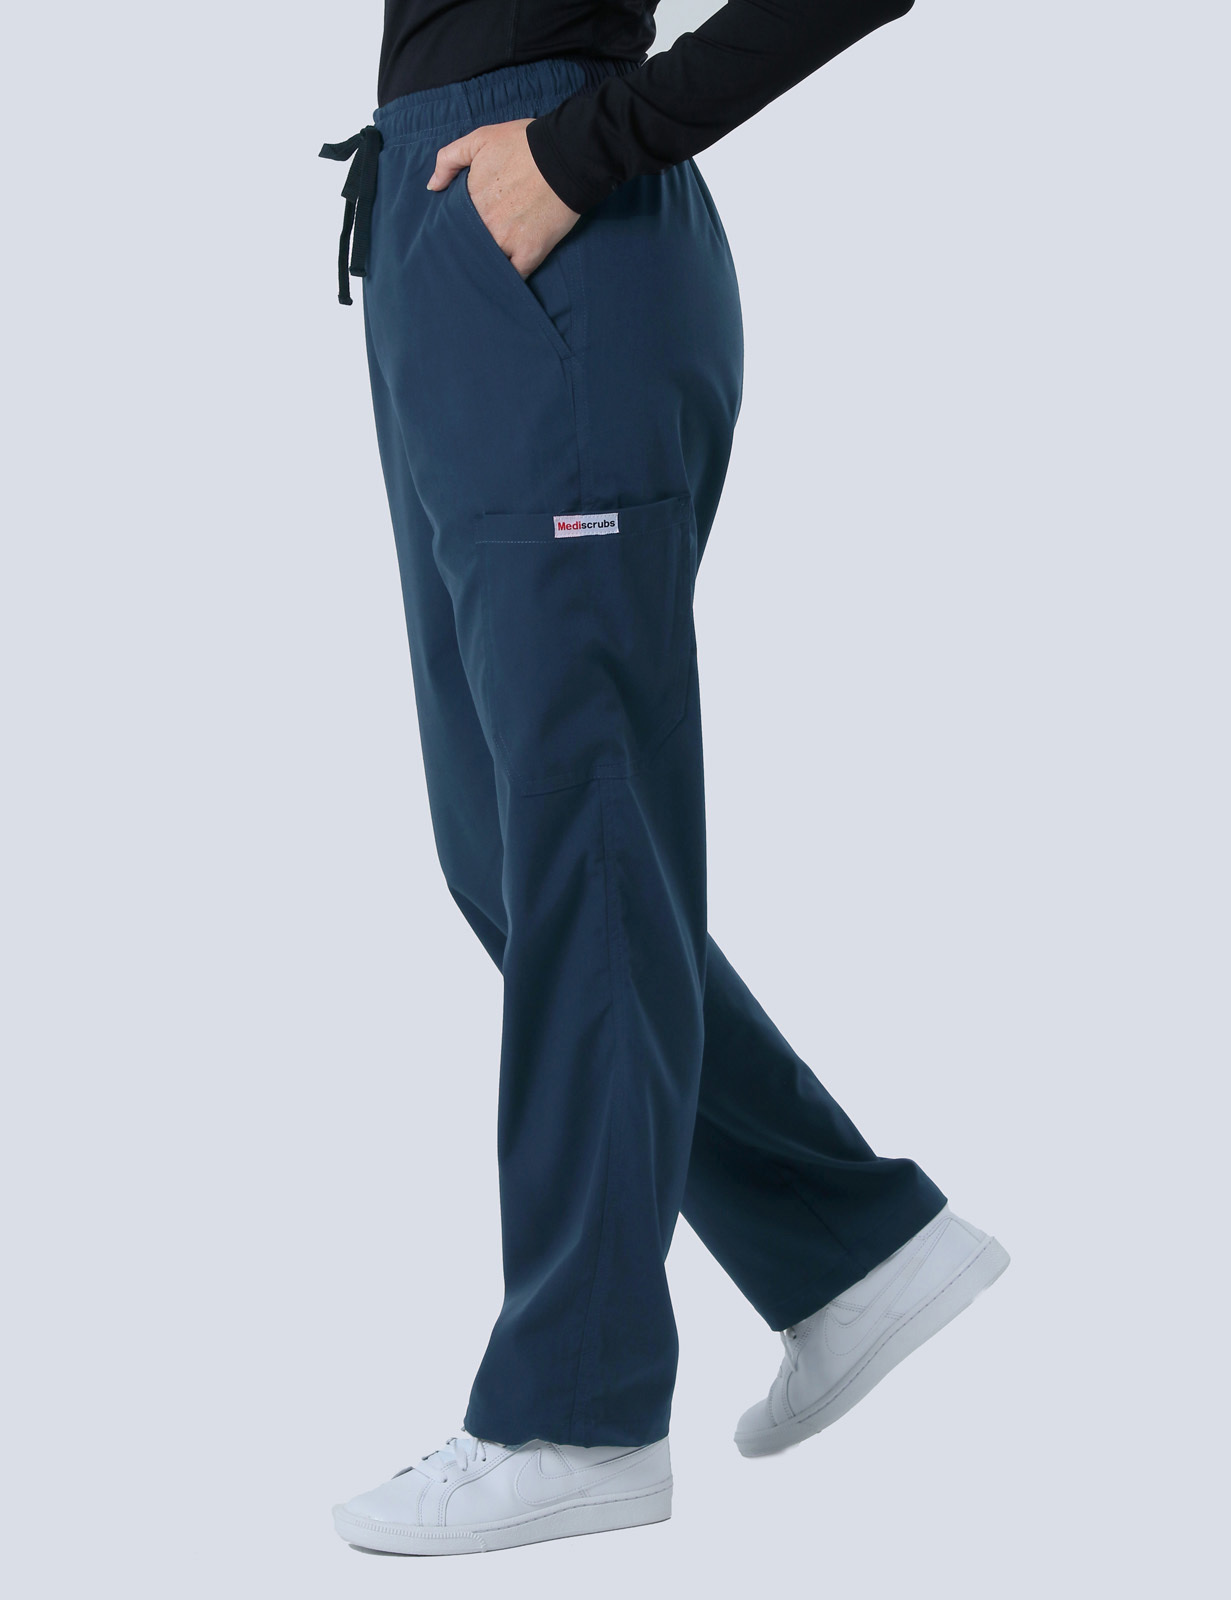 Newborn Nurse Practitioner Uniform Set Bundle (Women's Fit Spandex Top and Cargo Pants in Navy + Logo)